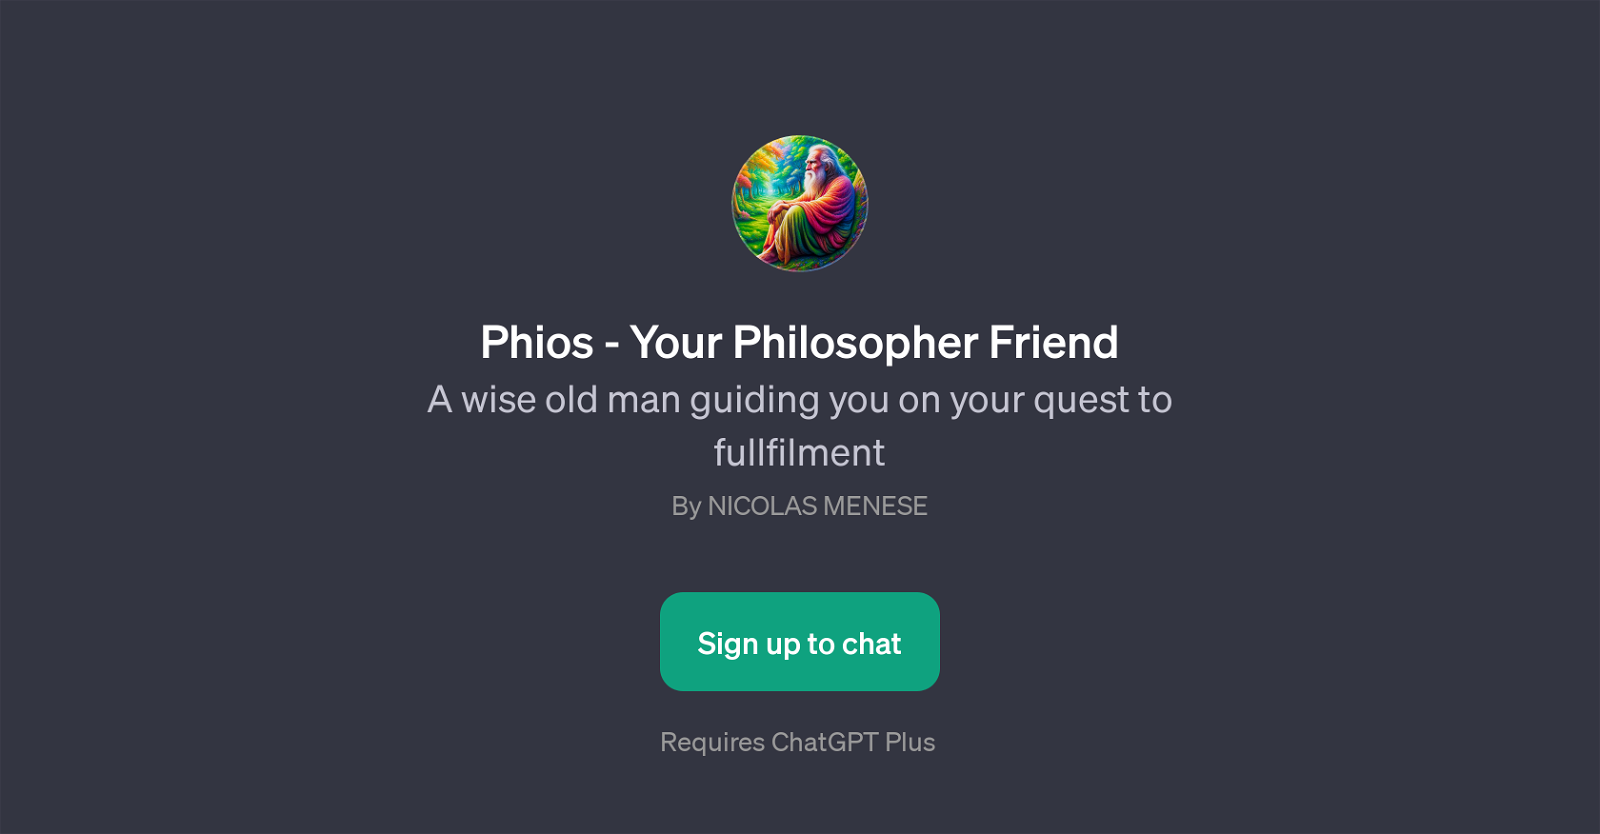 Phios - Your Philosopher Friend website